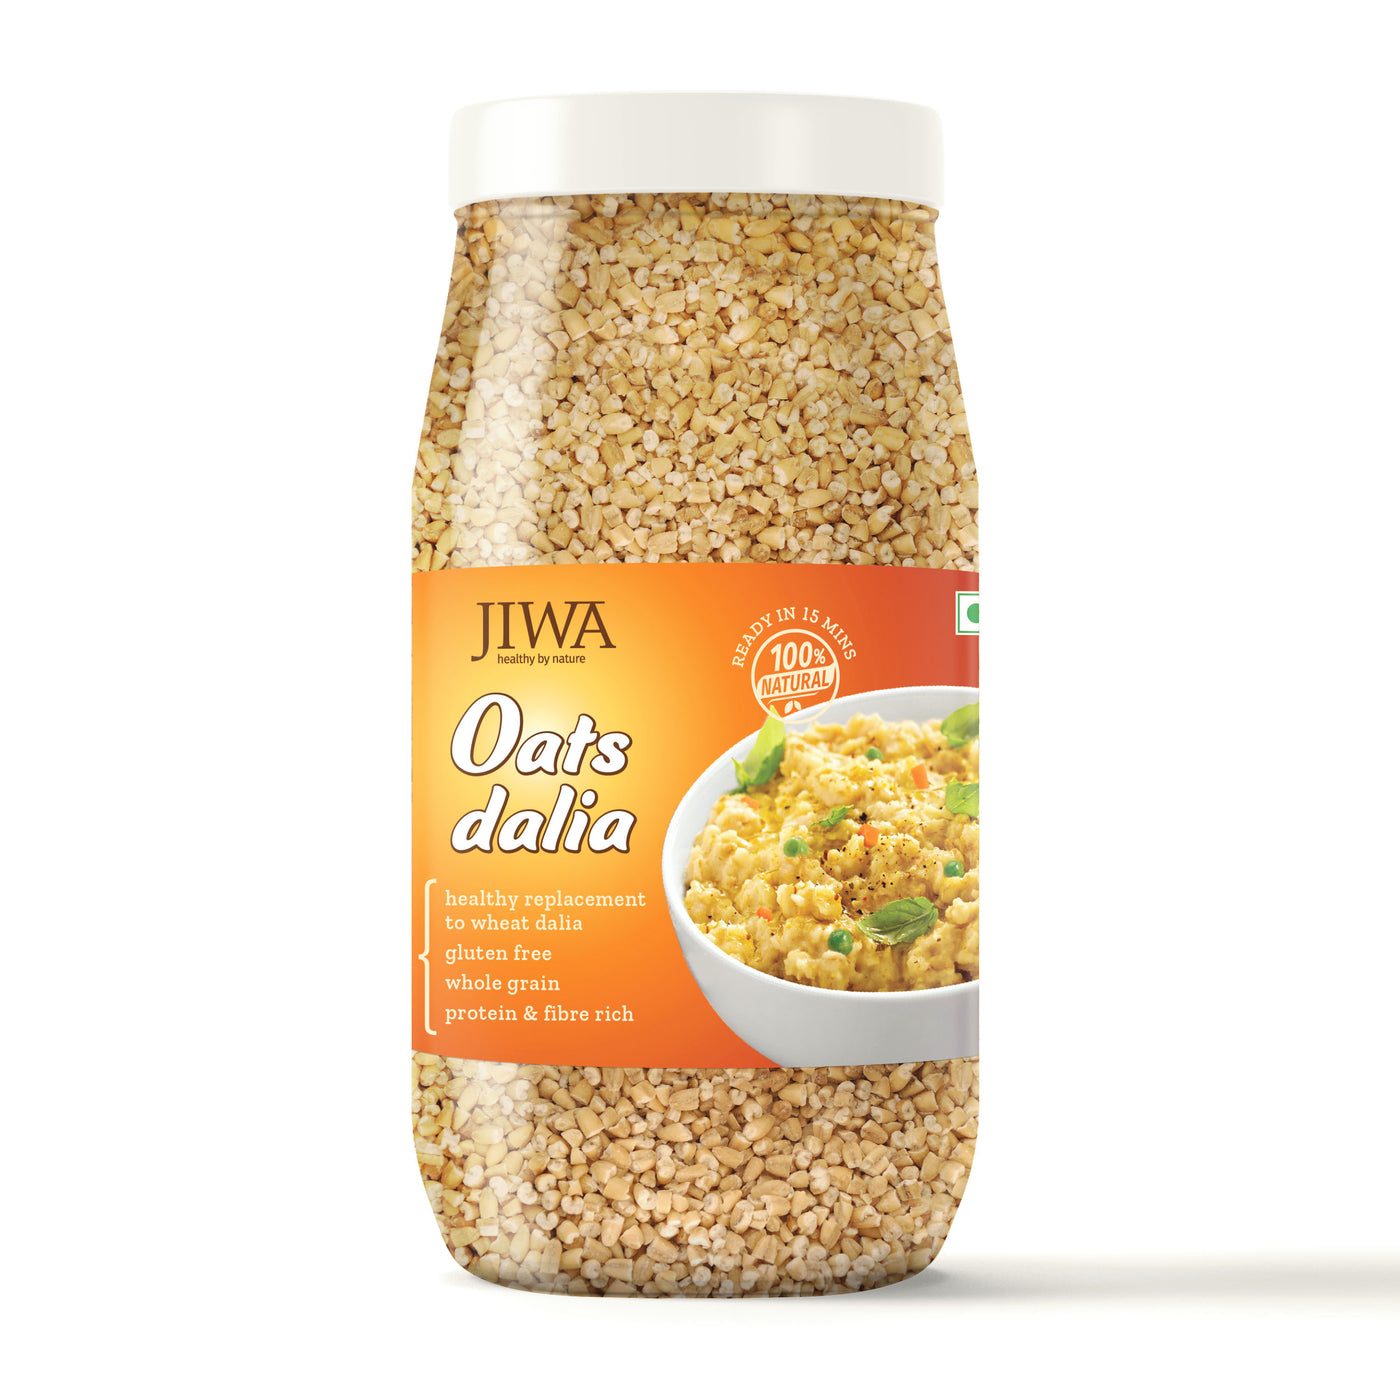  dalia online-jiwa organic oats